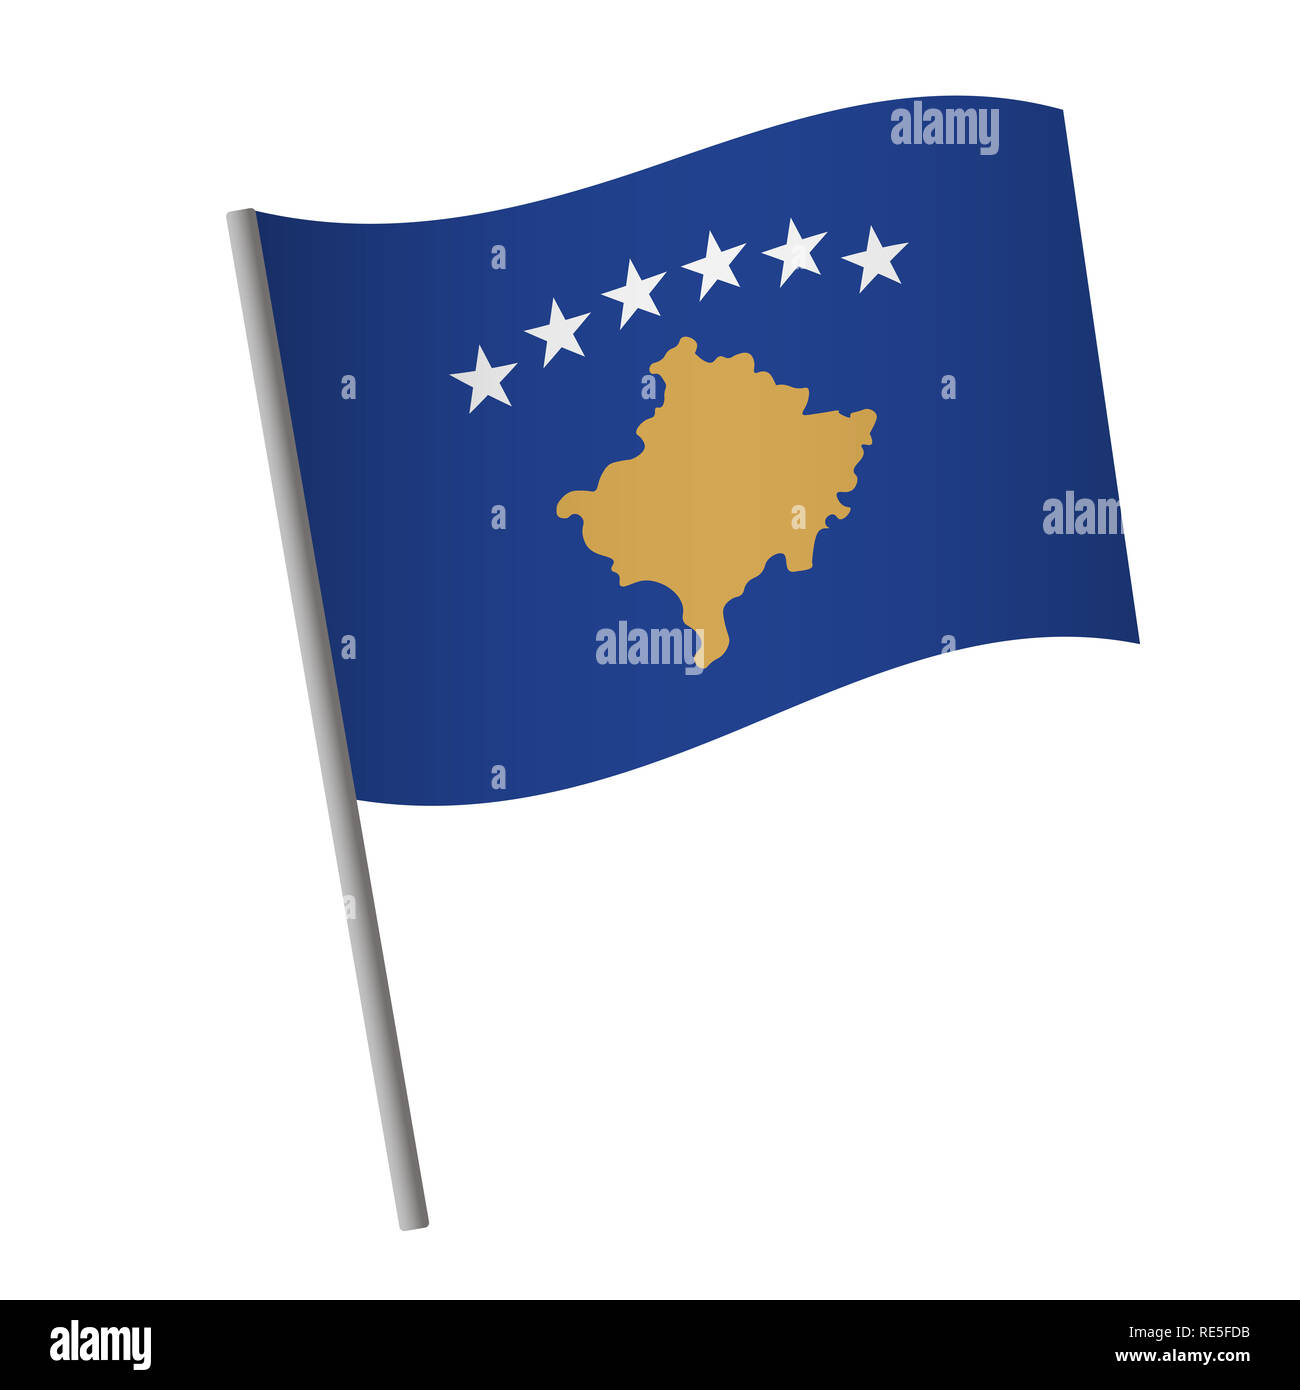 https://c8.alamy.com/comp/RE5FDB/kosovo-flag-icon-national-flag-of-kosovo-on-a-pole-illustration-RE5FDB.jpg